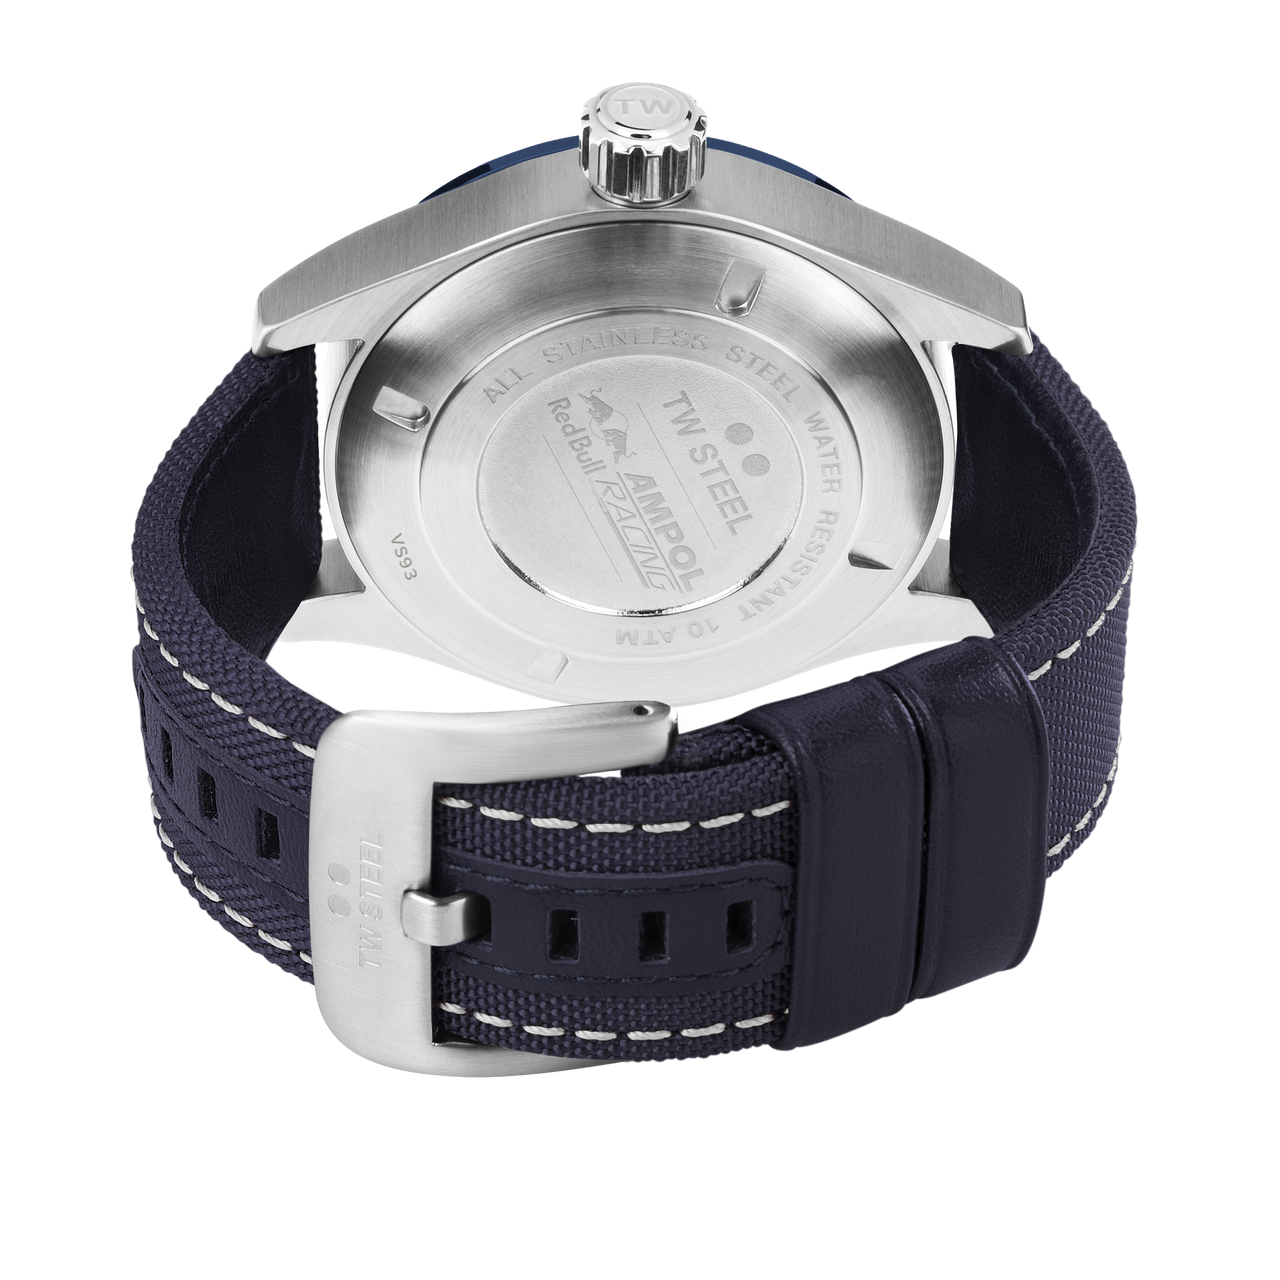 TW Steel Watch Volante Red Bull VS93